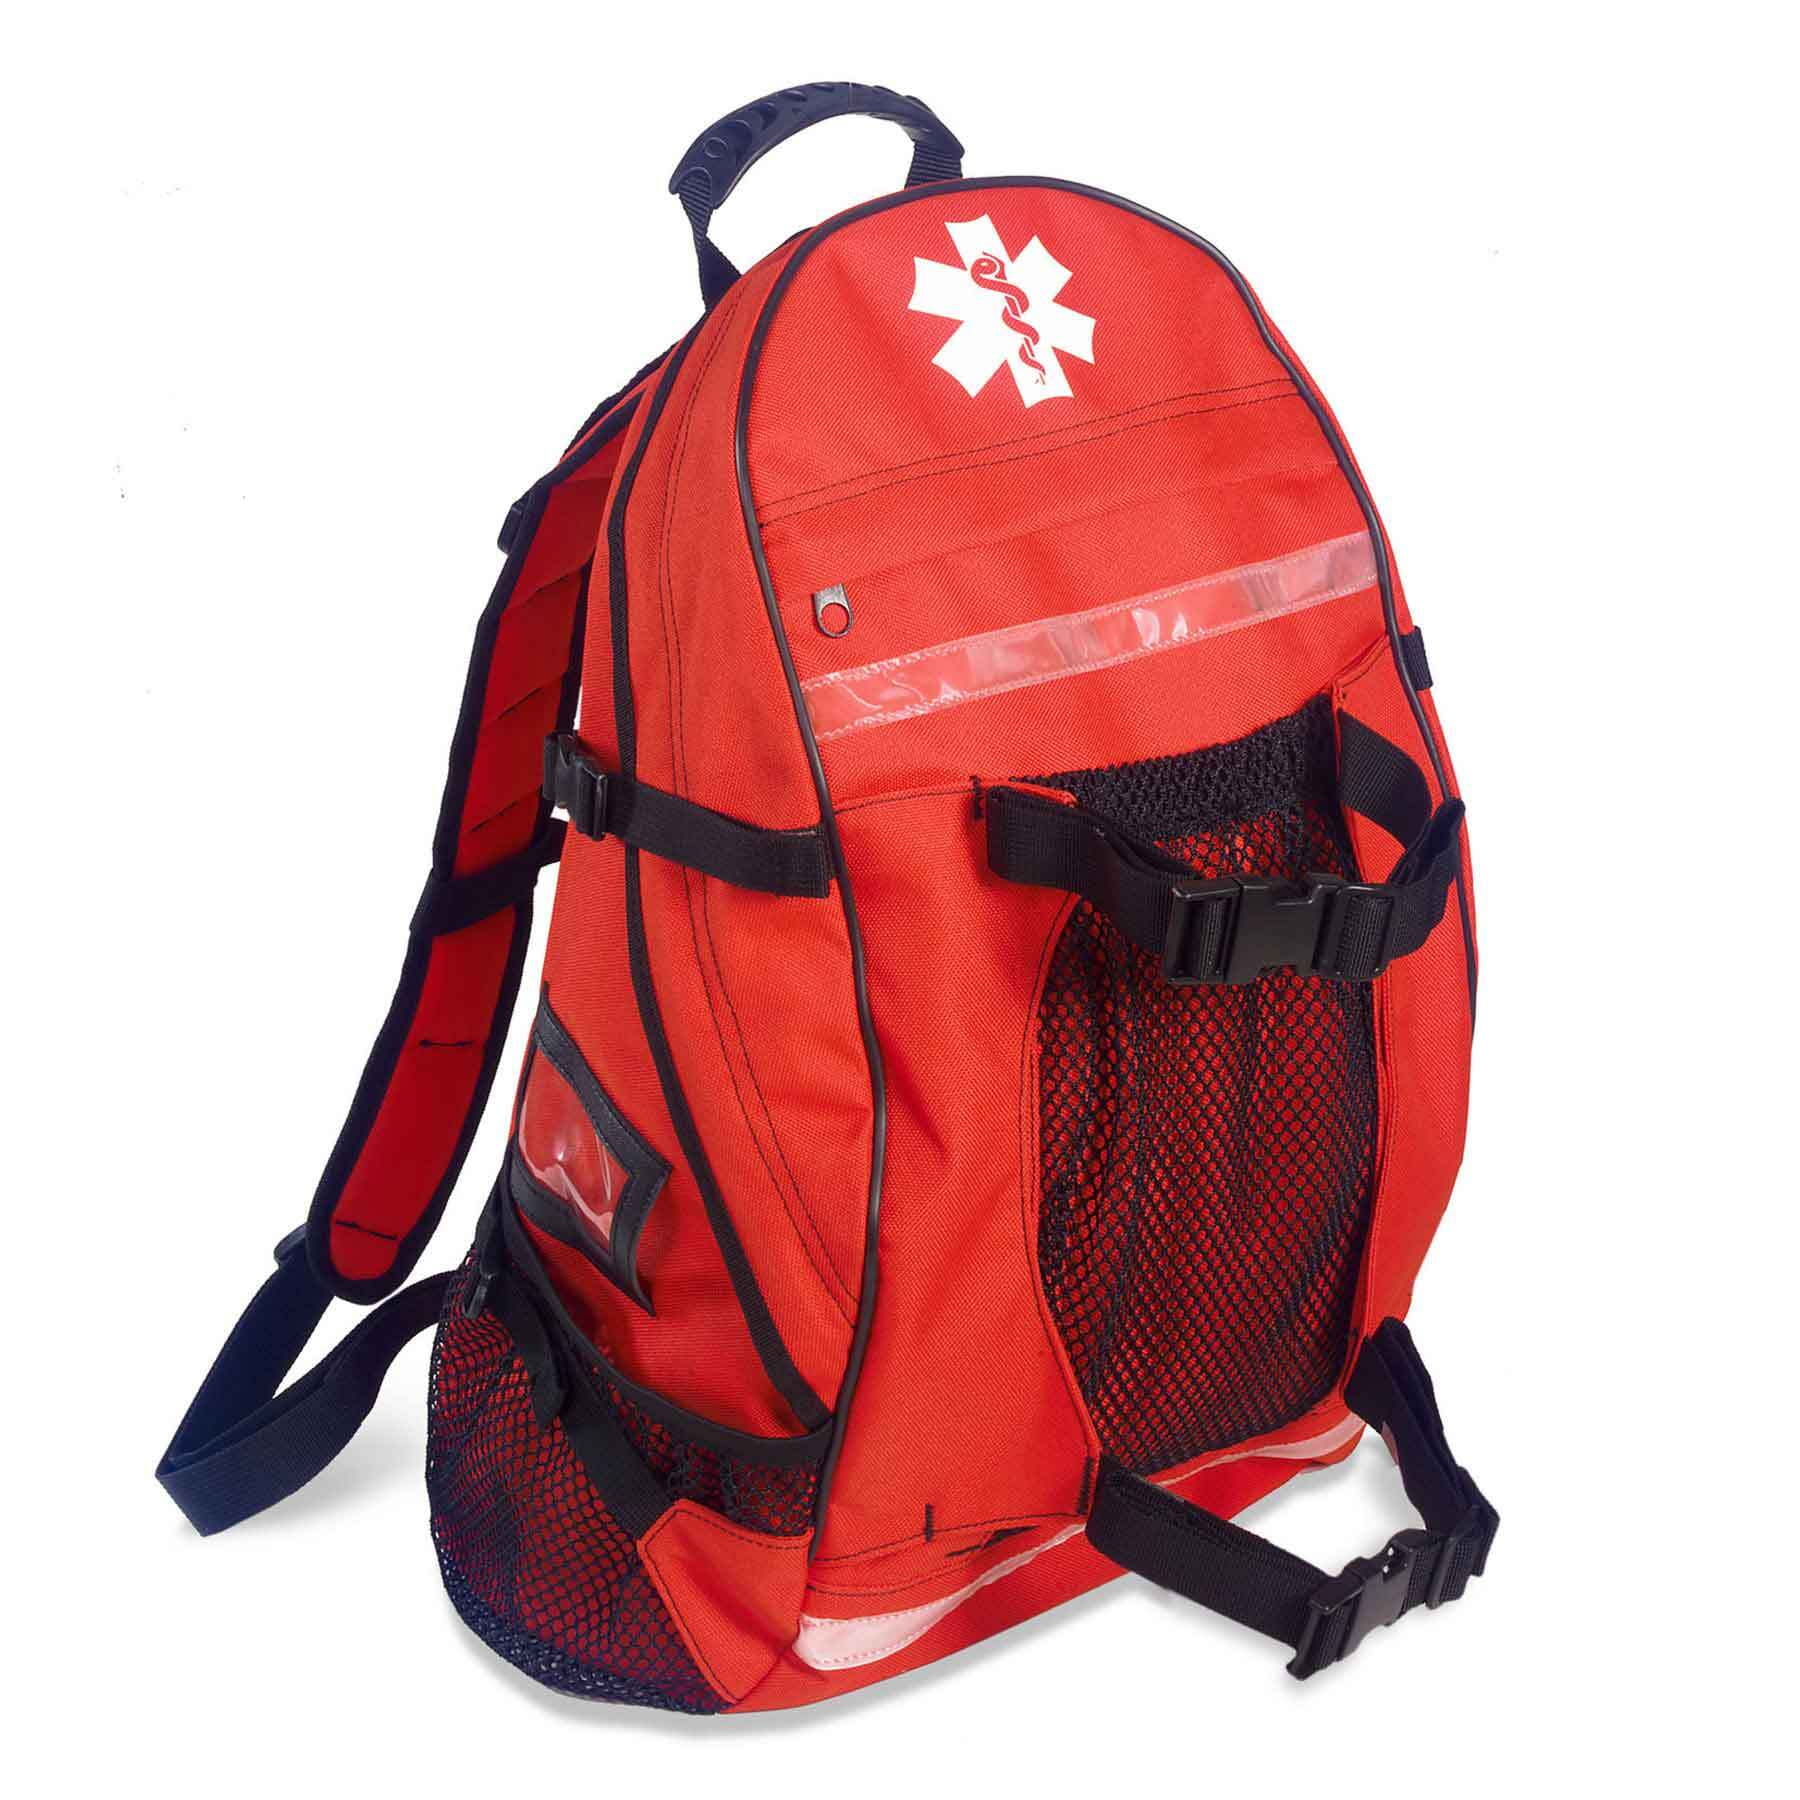 Orange Ergodyne Arsenal 5220 Medic First Responder Trauma Bag 